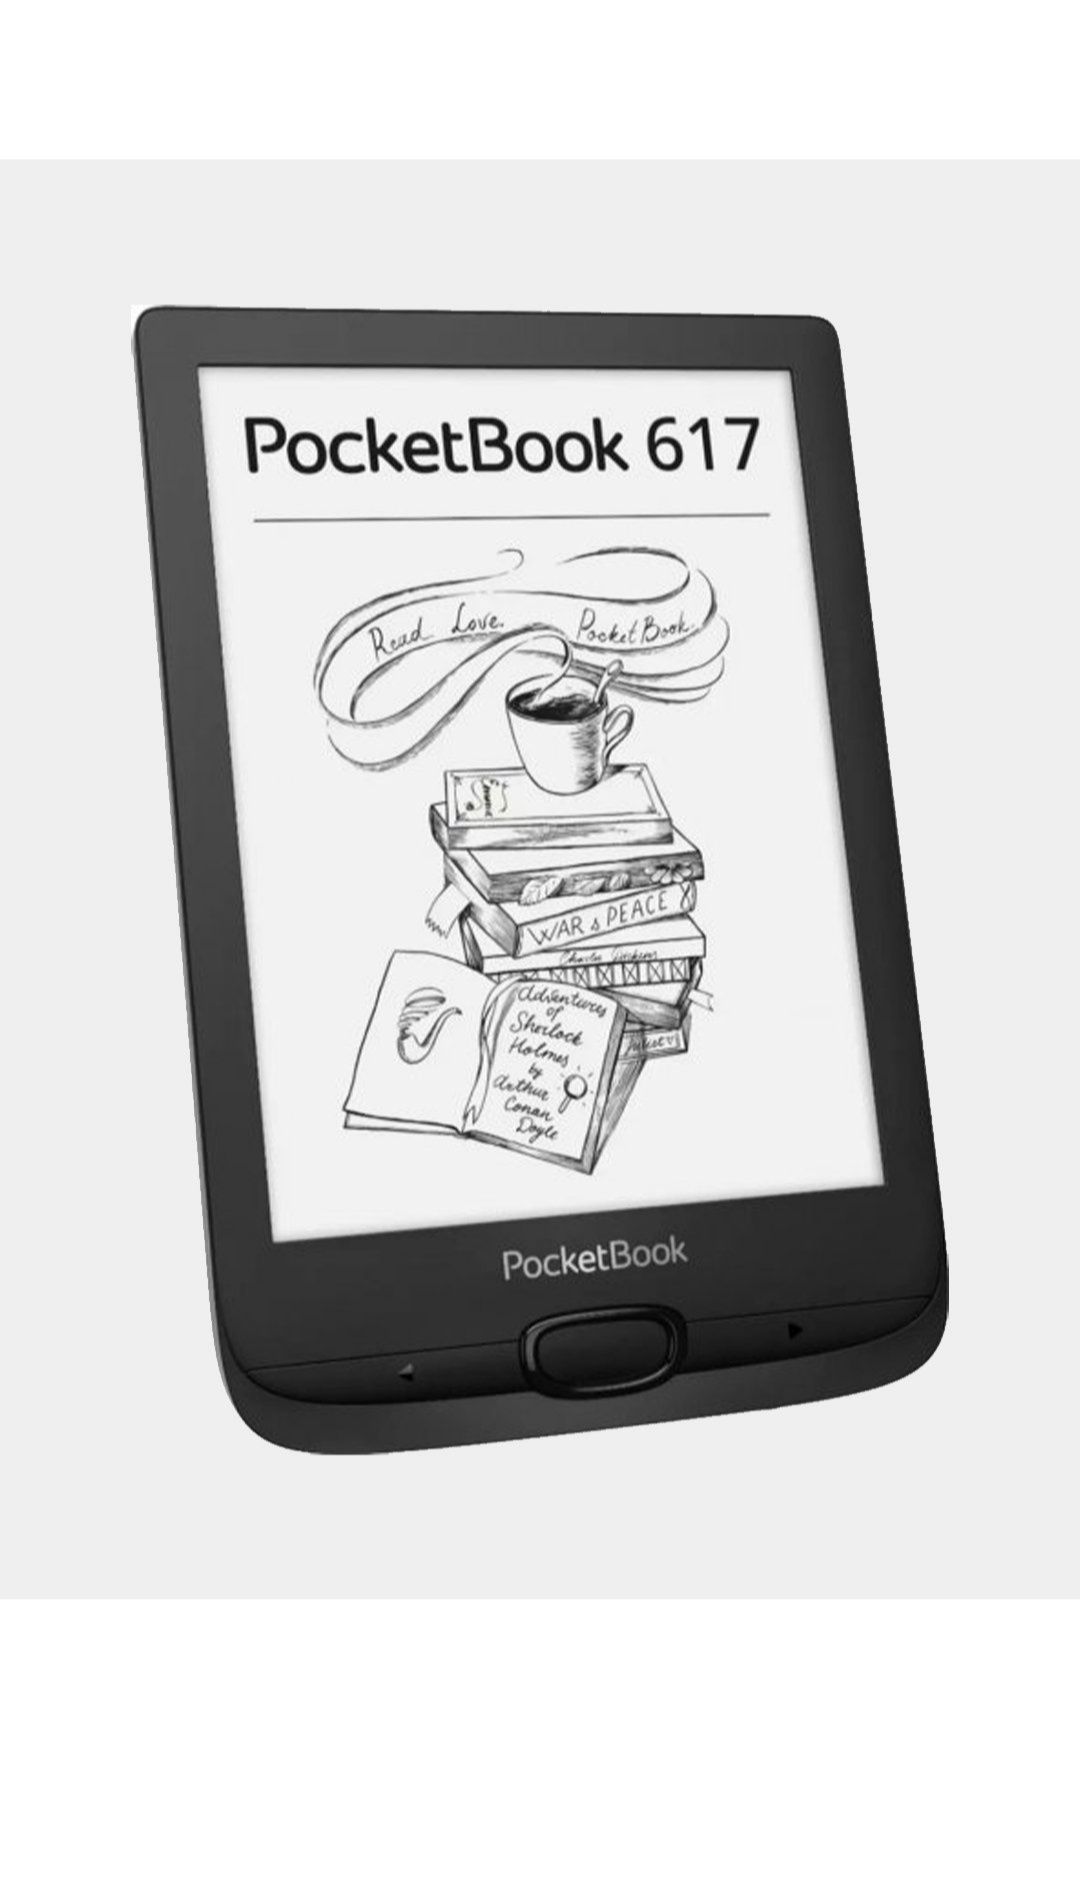 Pocketbook 617. 2 yil garantiya